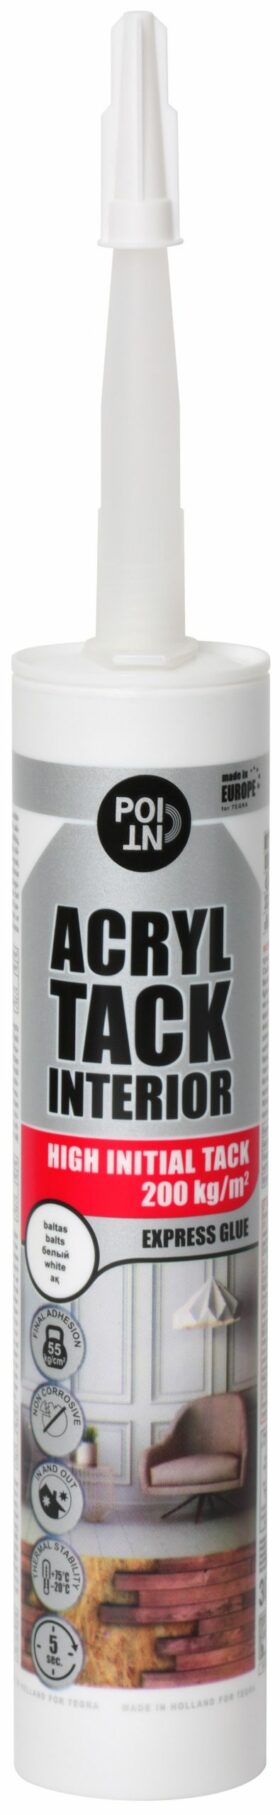 Acrylic adhesive ACRYL TACK INTERIOR